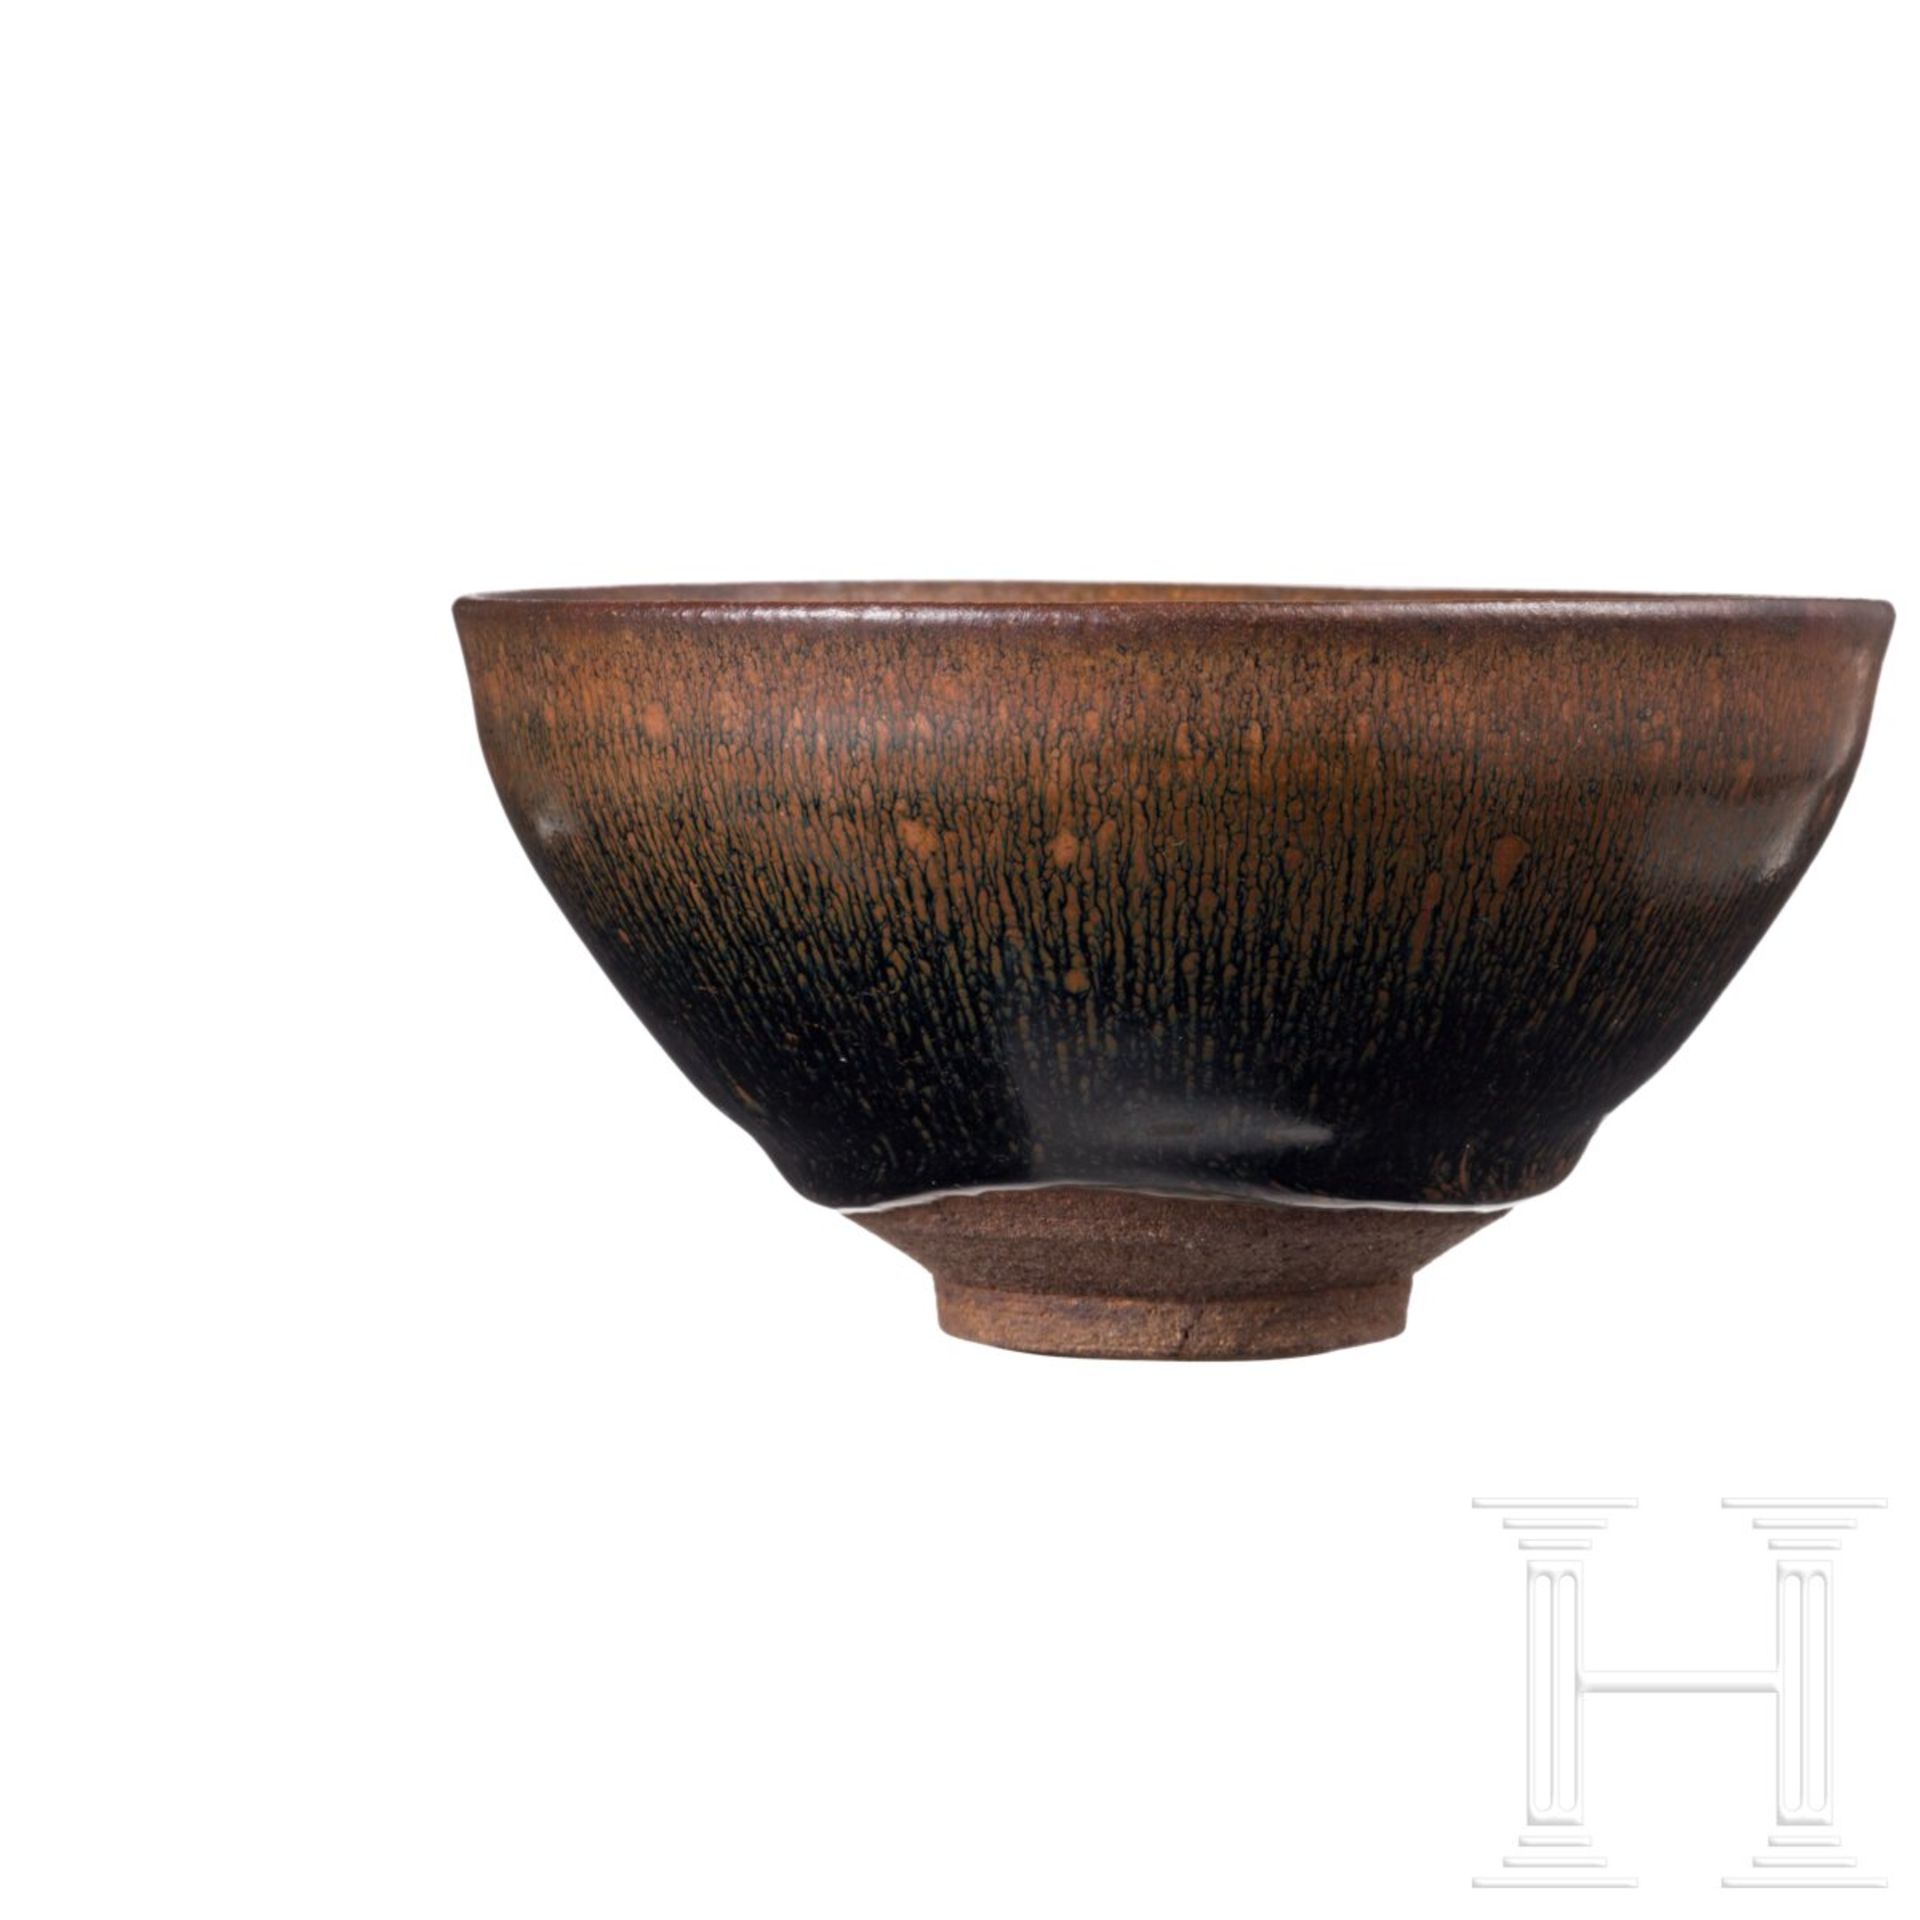 Jianyao-Teeschale mit Hasenfellglasur, China, wohl Song-Dynastie (12./13. Jhdt.) - Bild 2 aus 21